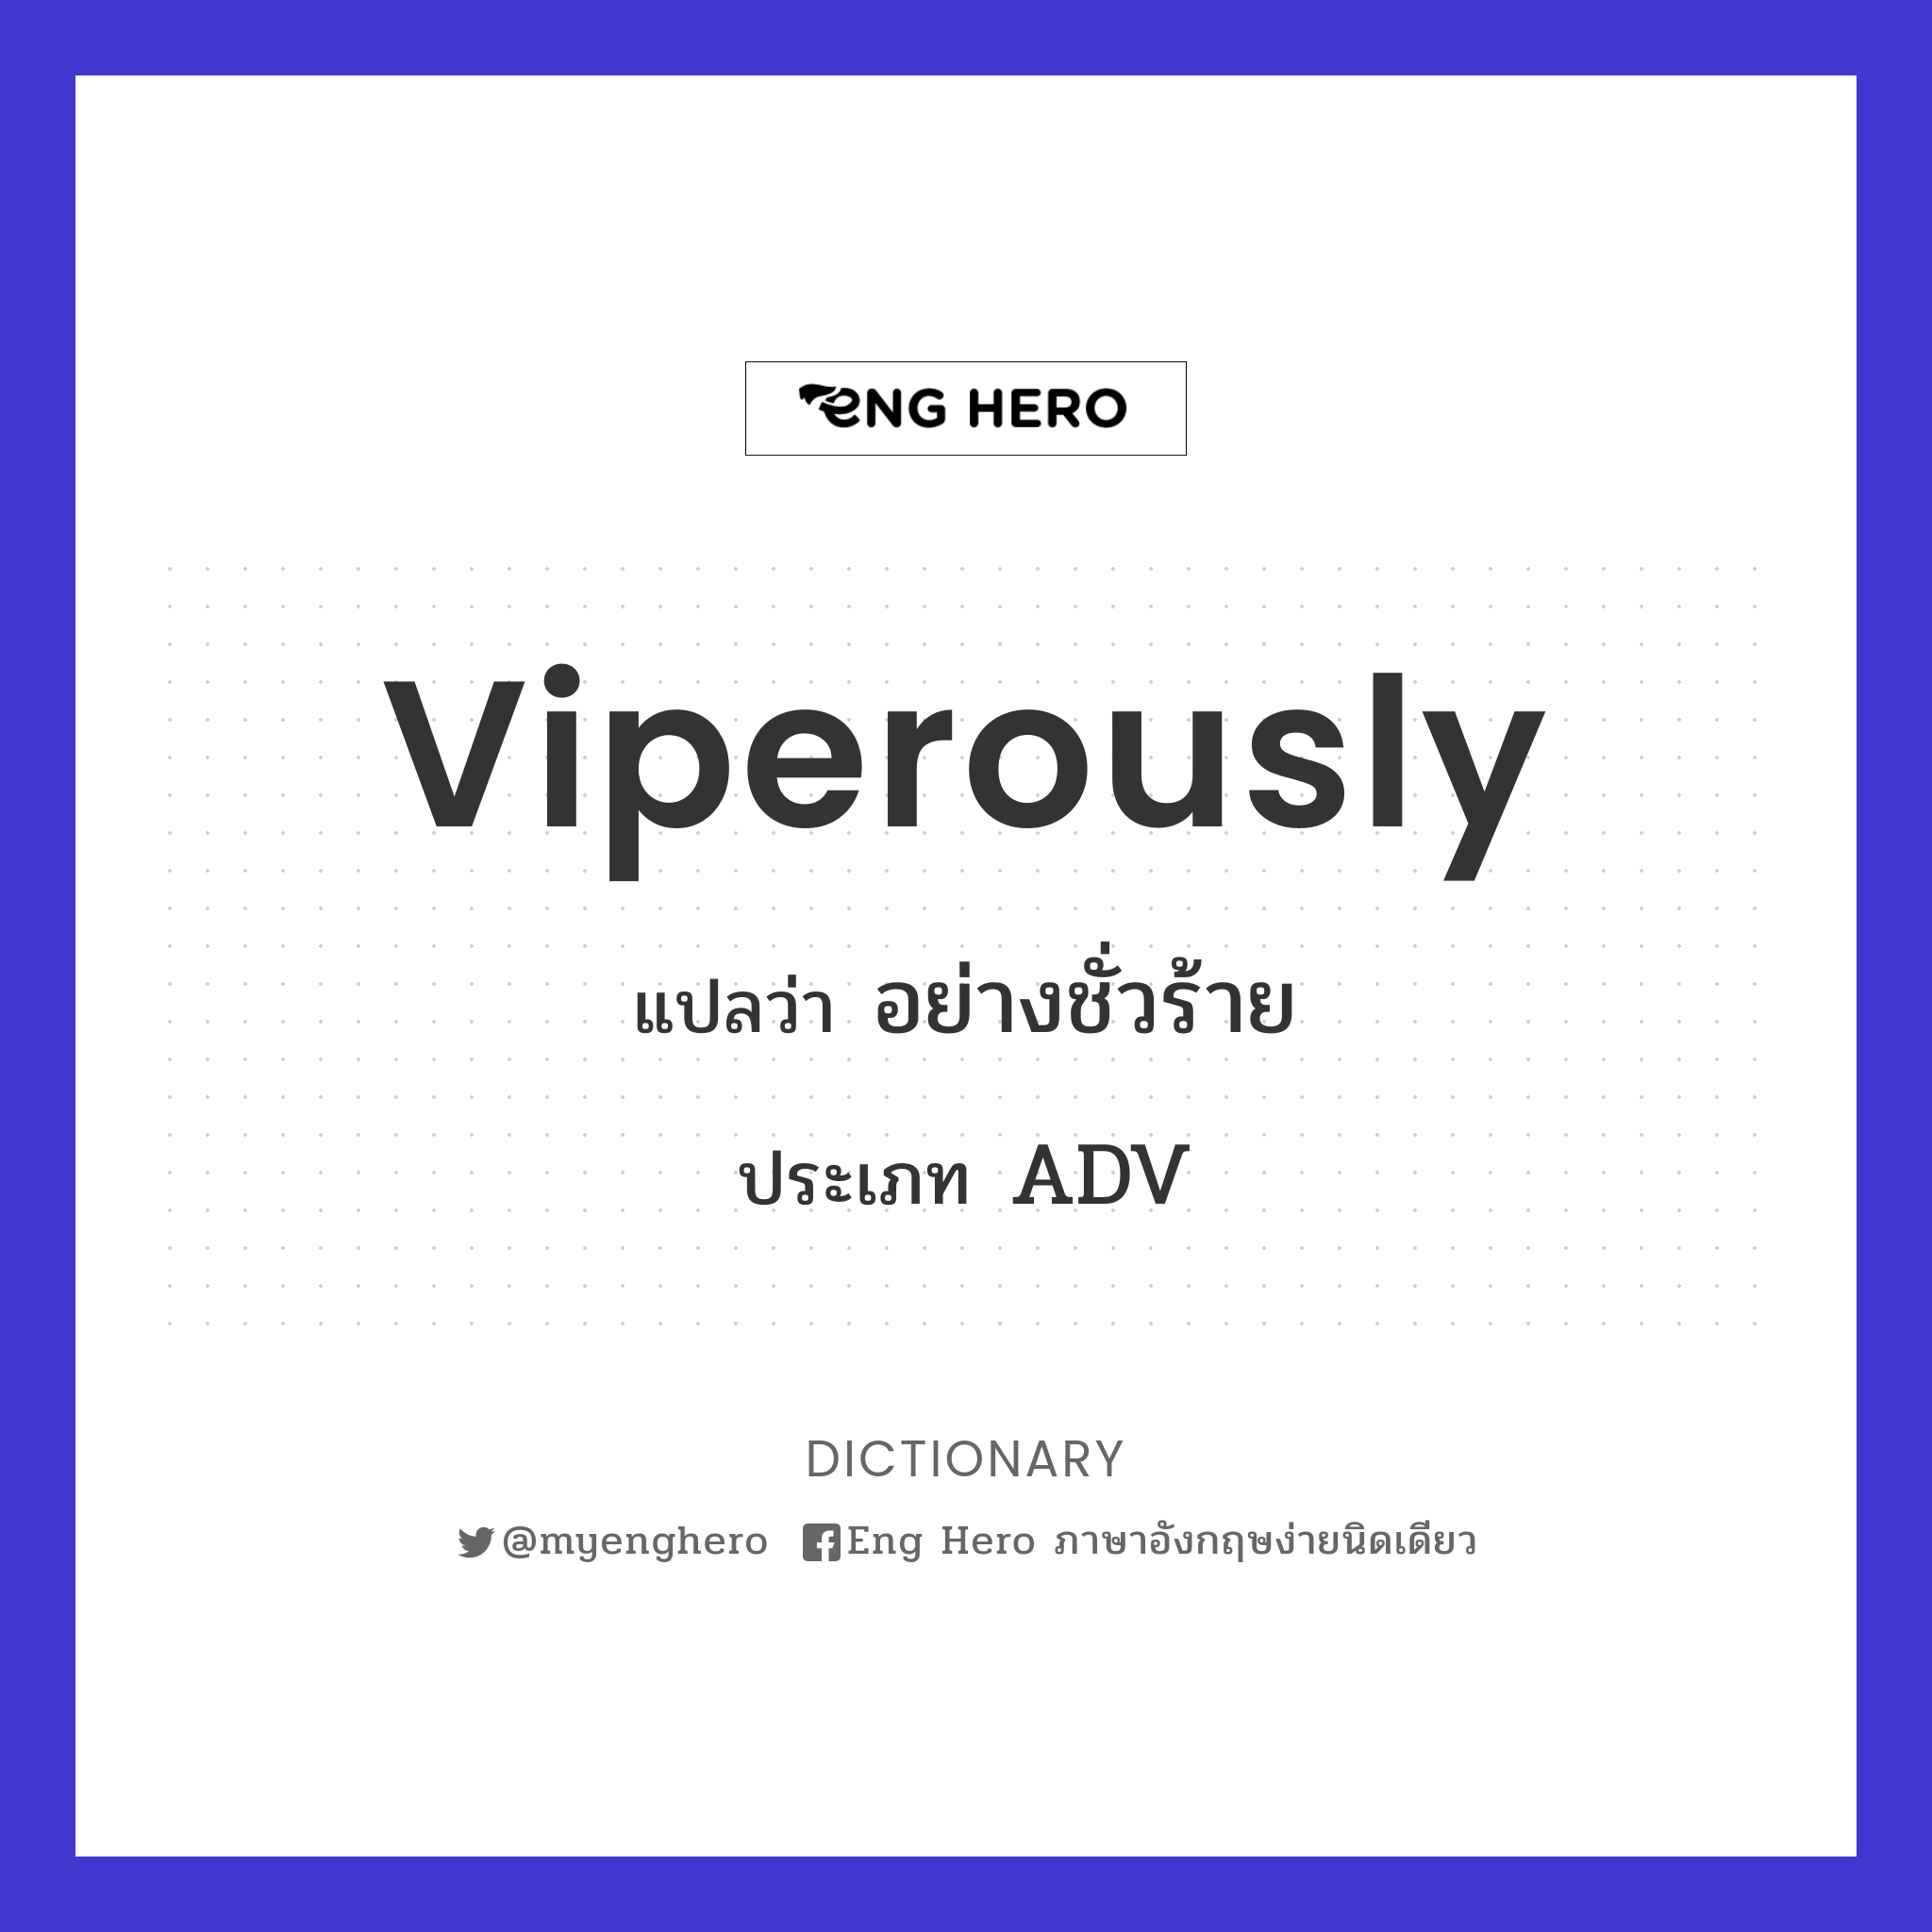 viperously